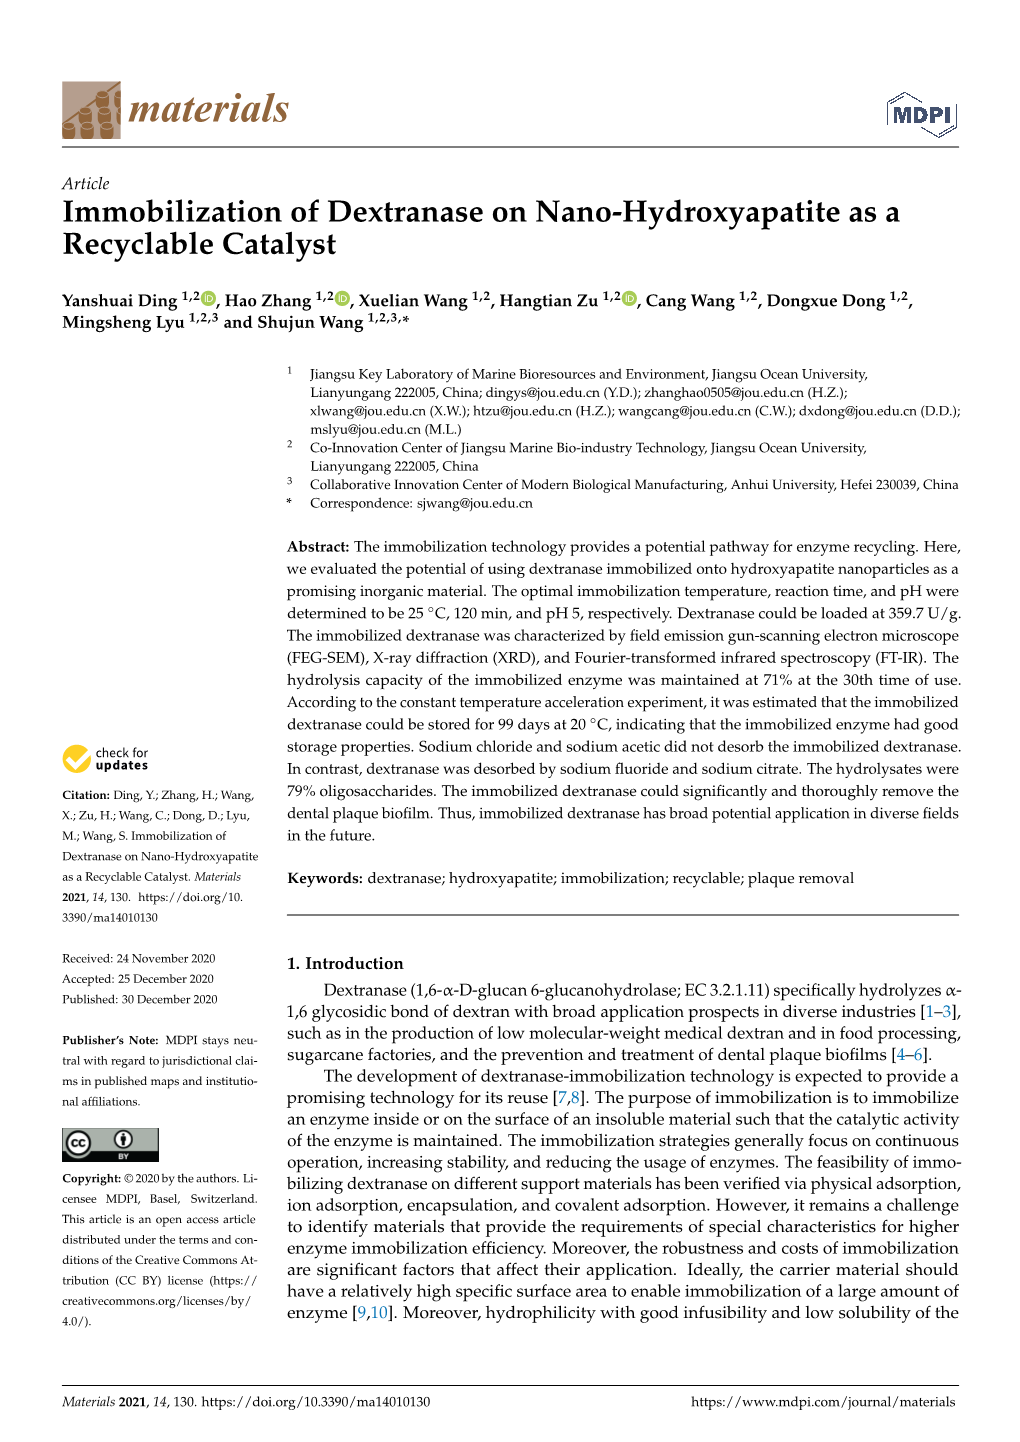 Immobilization of Dextranase on Nano-Hydroxyapatite As a Recyclable Catalyst